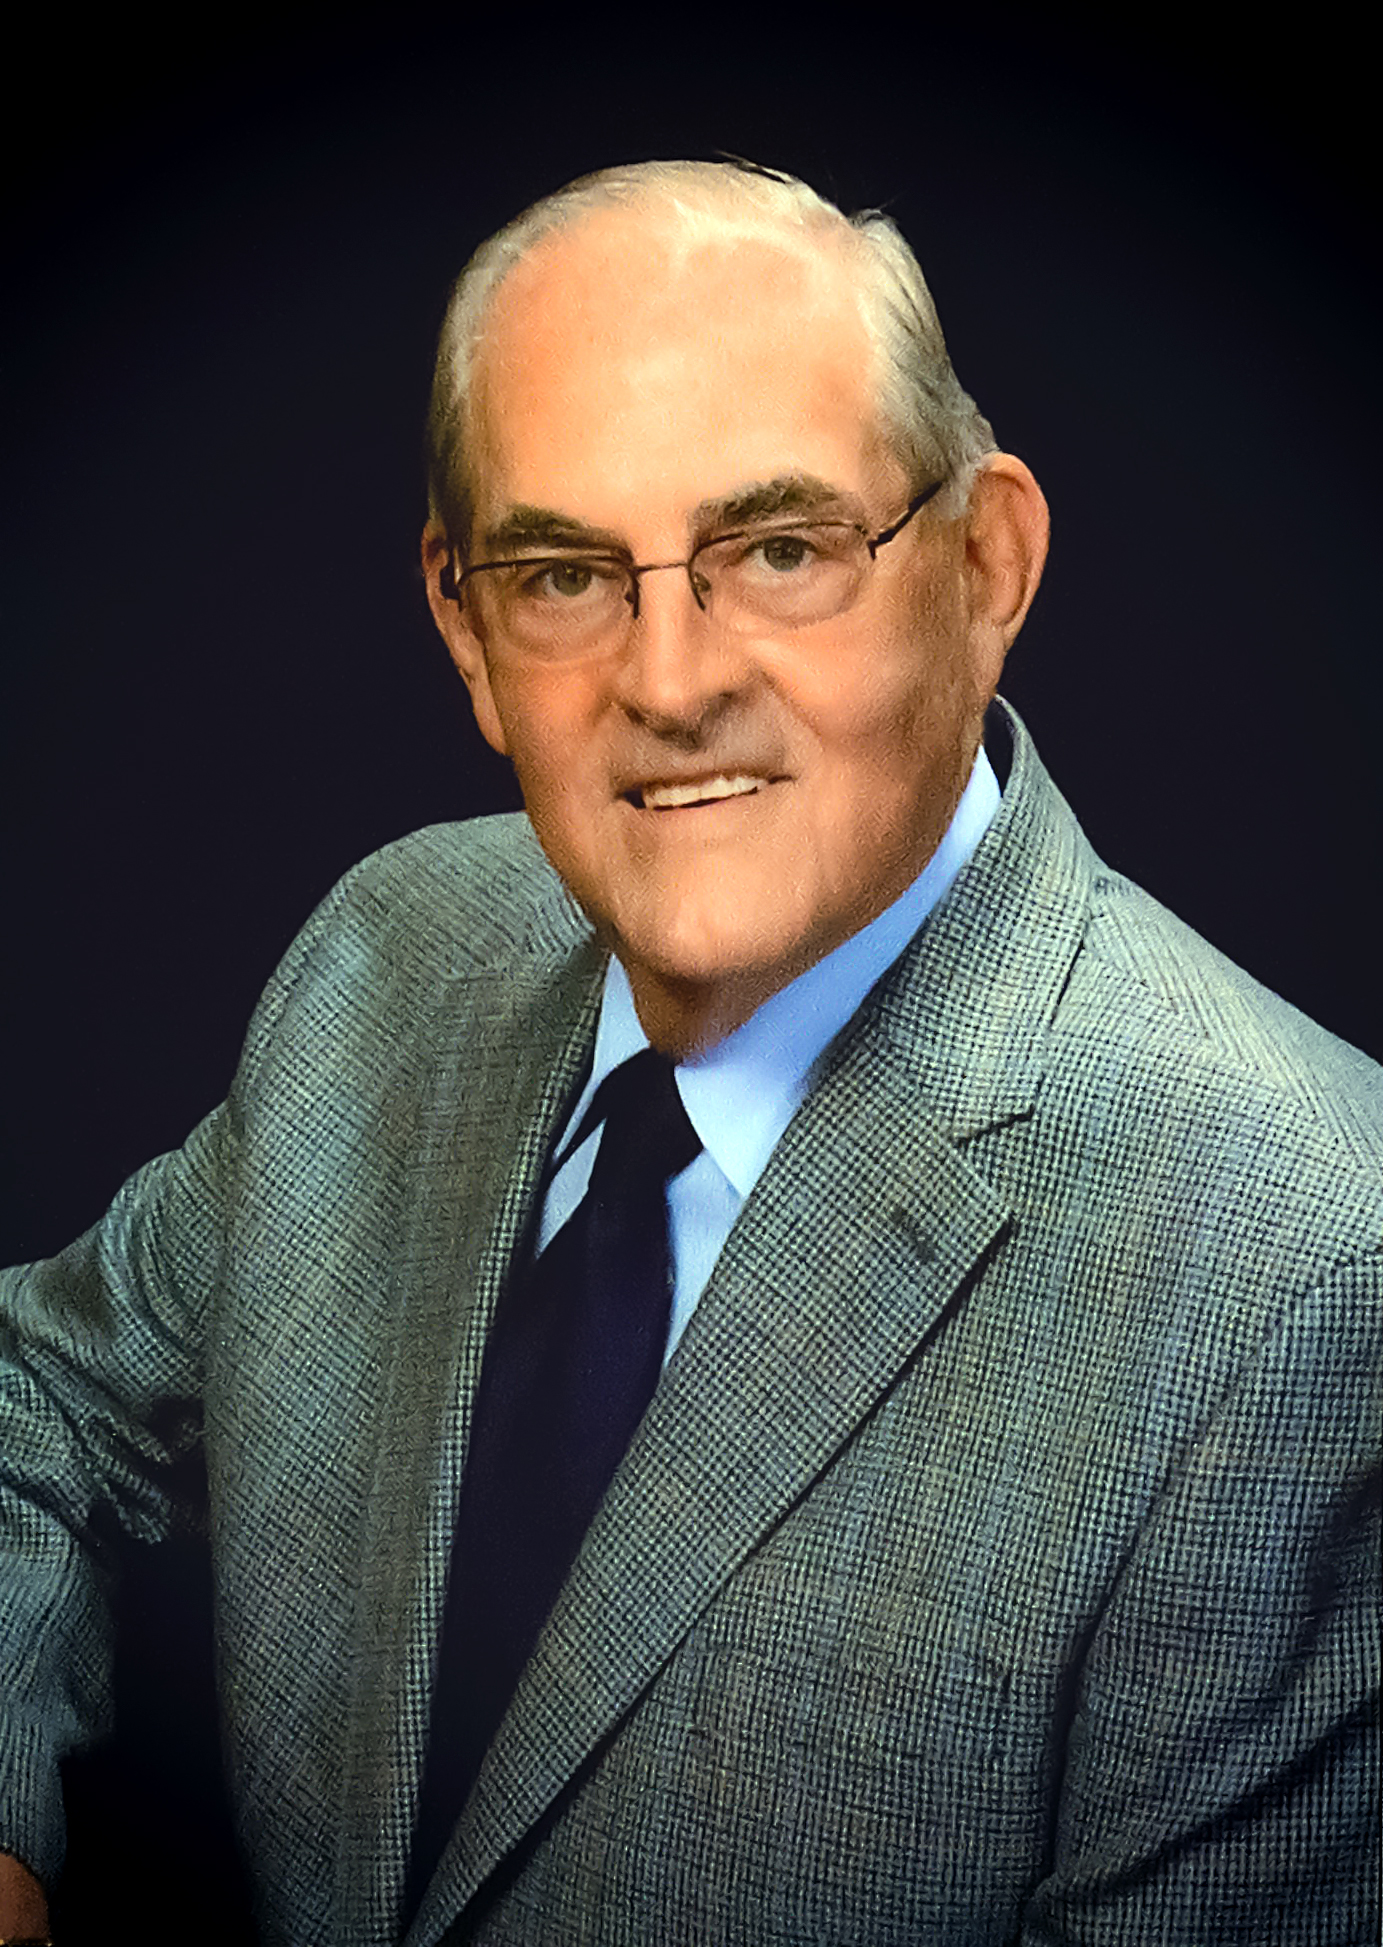 Mayor Frank Campion’s statement on the passing of Doug Rapelje